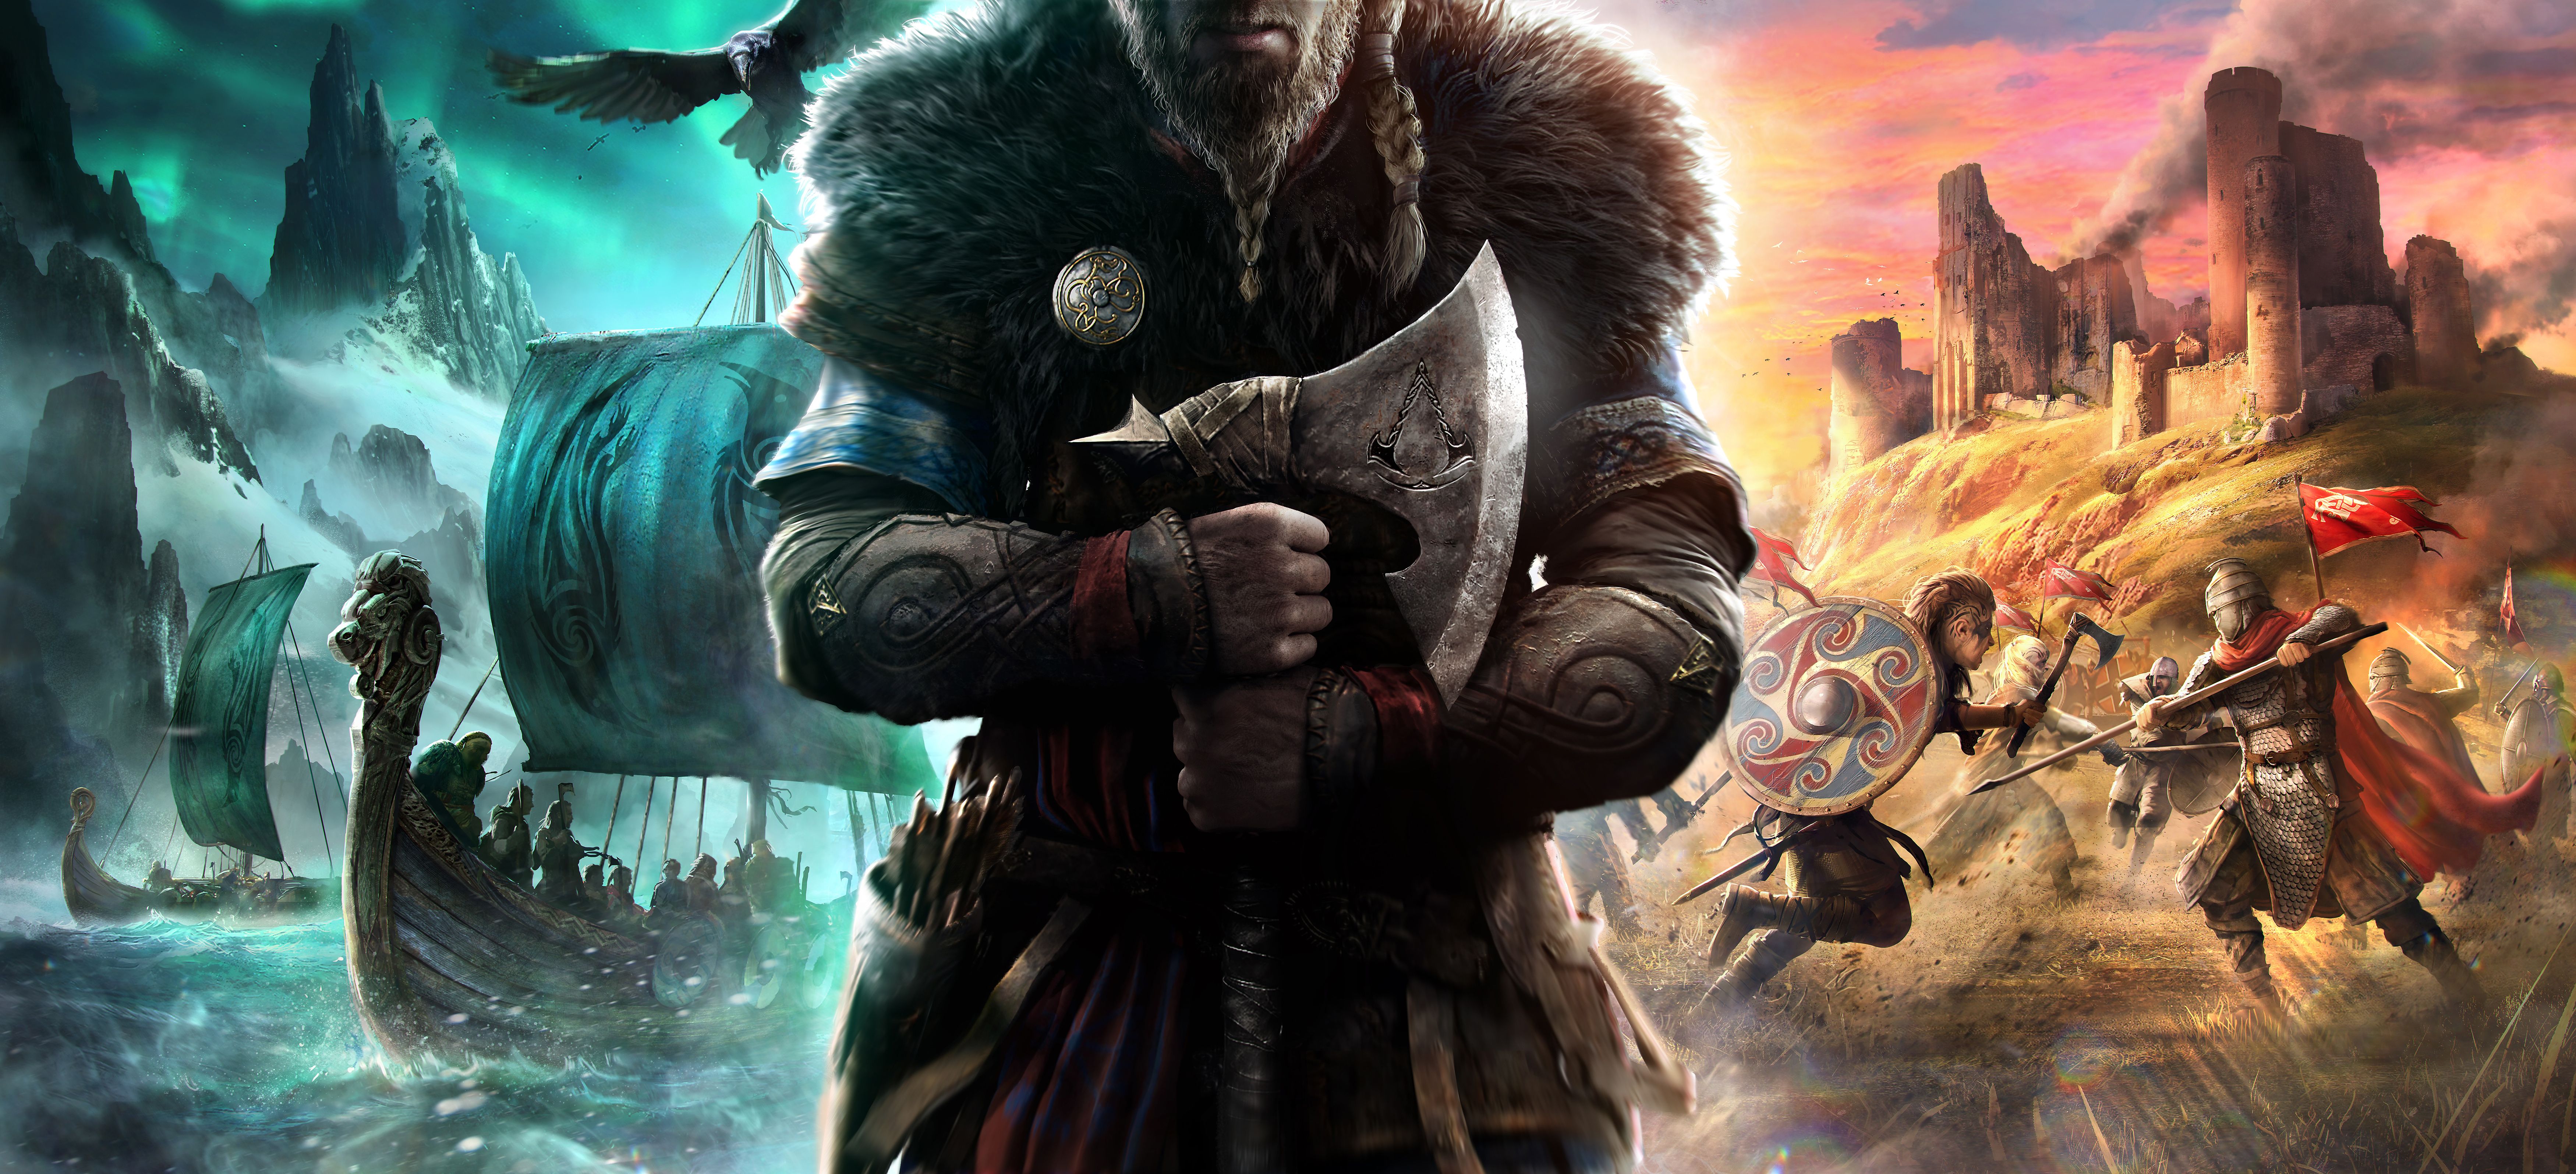 Assassin's Creed Valhalla 4K Wallpaper, Eivor, Viking raider, PC games, PlayStation PlayStation Xbox One, Games